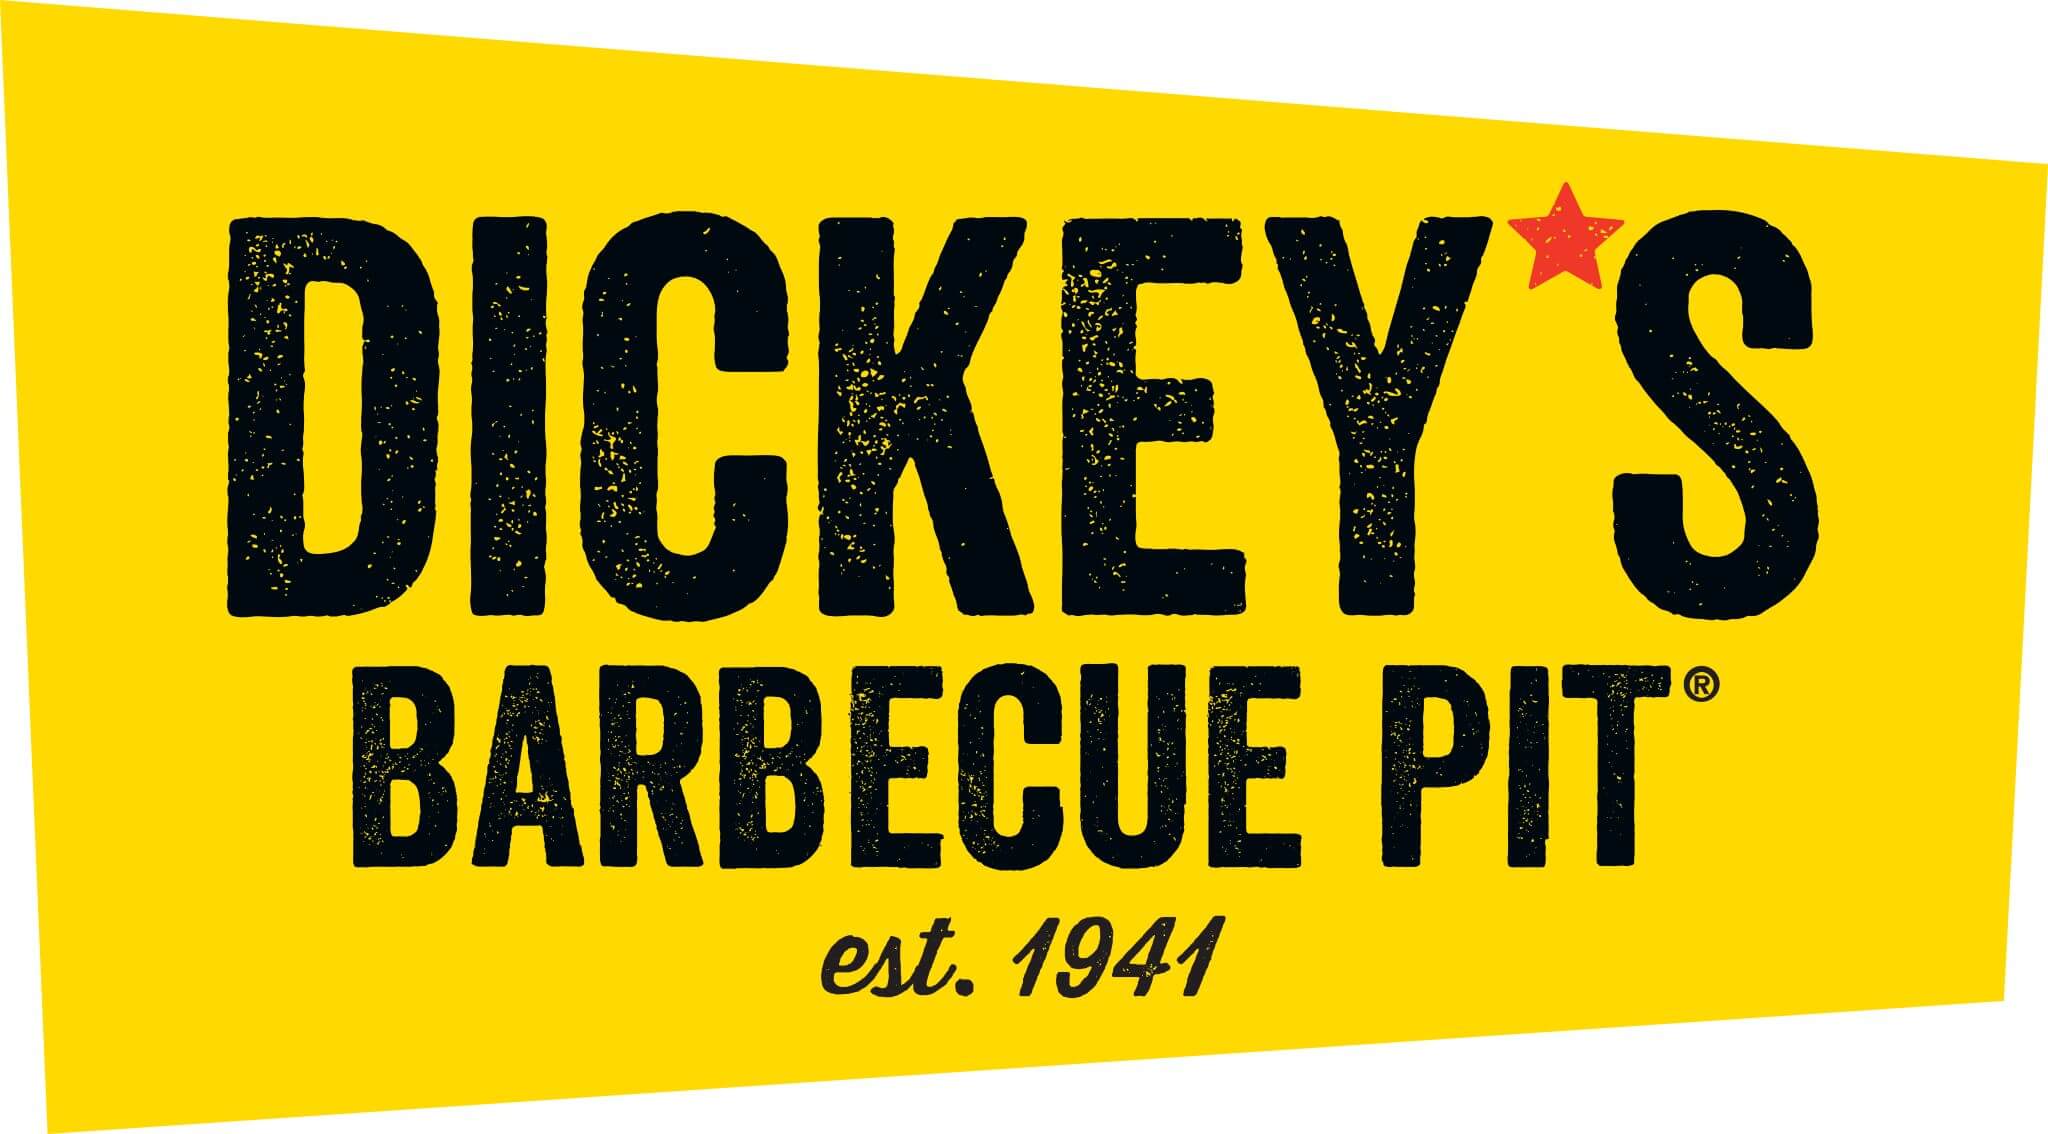 Dickey's BBQ Pit